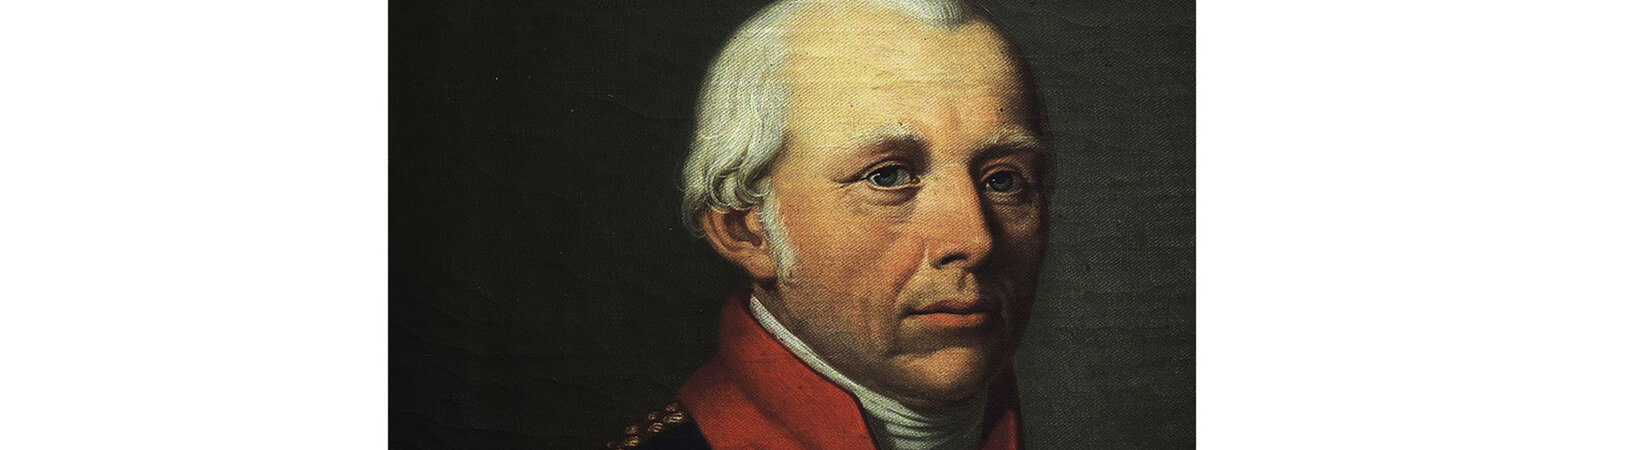 Duke Ernst II of Saxe-Gotha and Altenburg (1745-1804) between science, politics and secret society activities